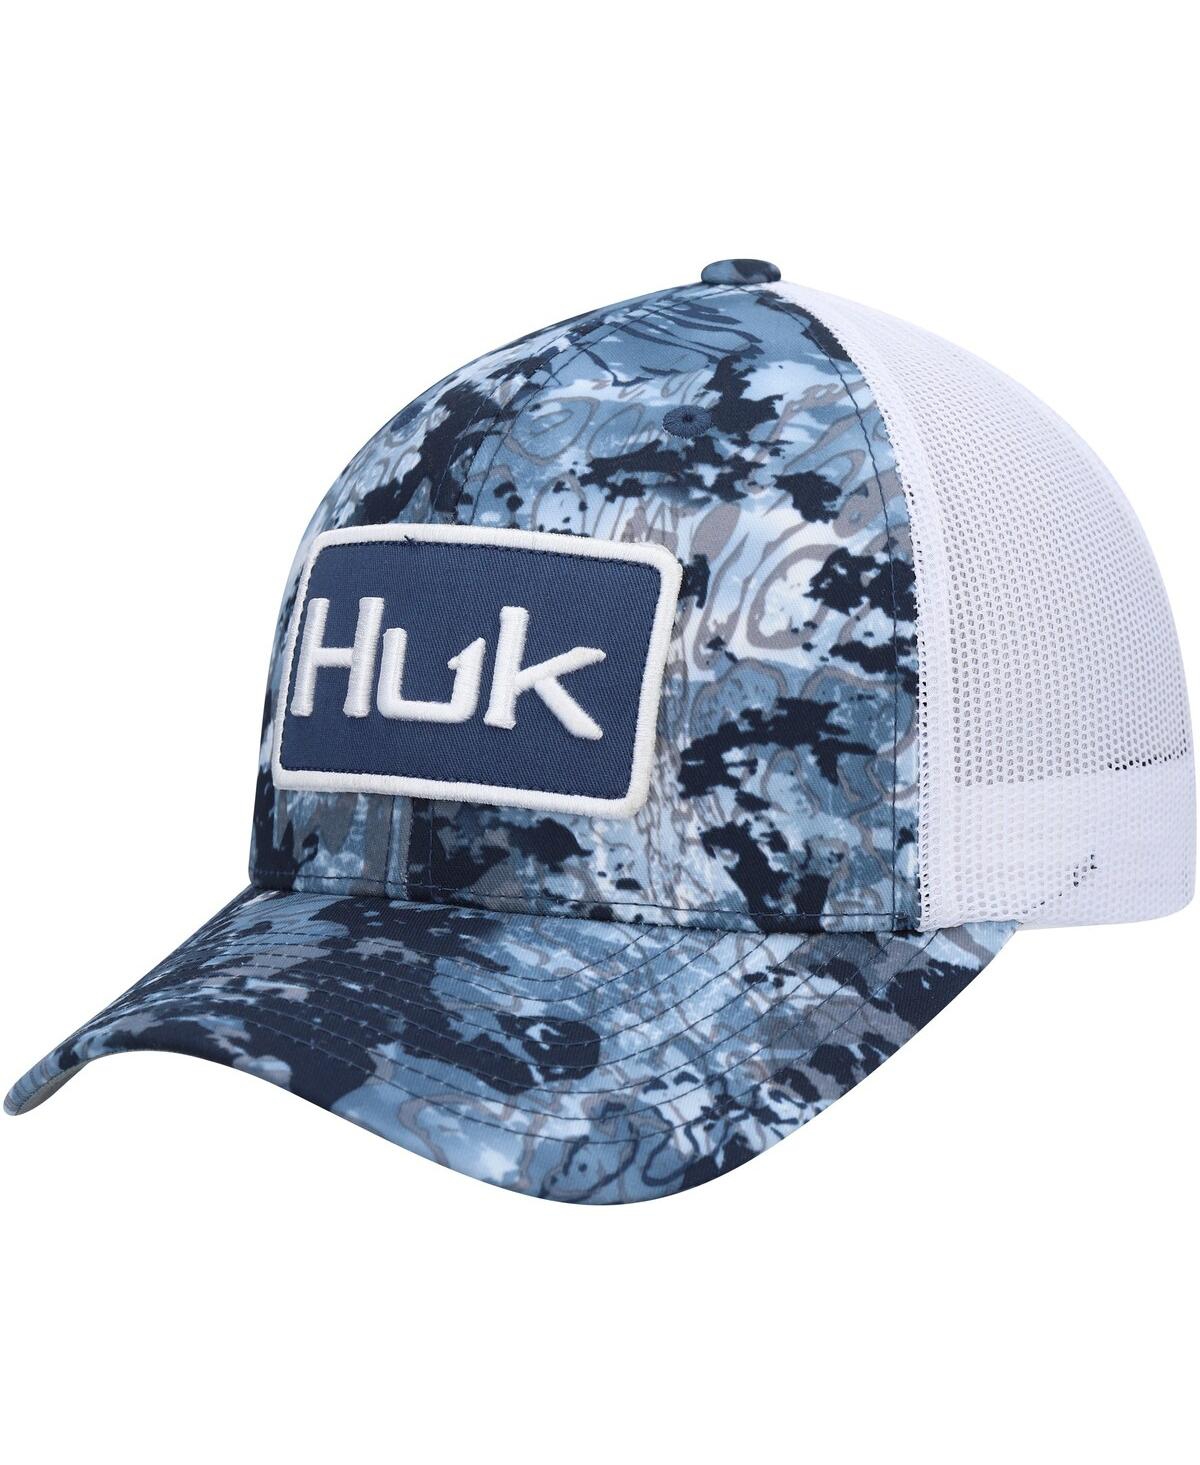 Men's Huk Blue Tide Change Trucker Snapback Hat - Blue